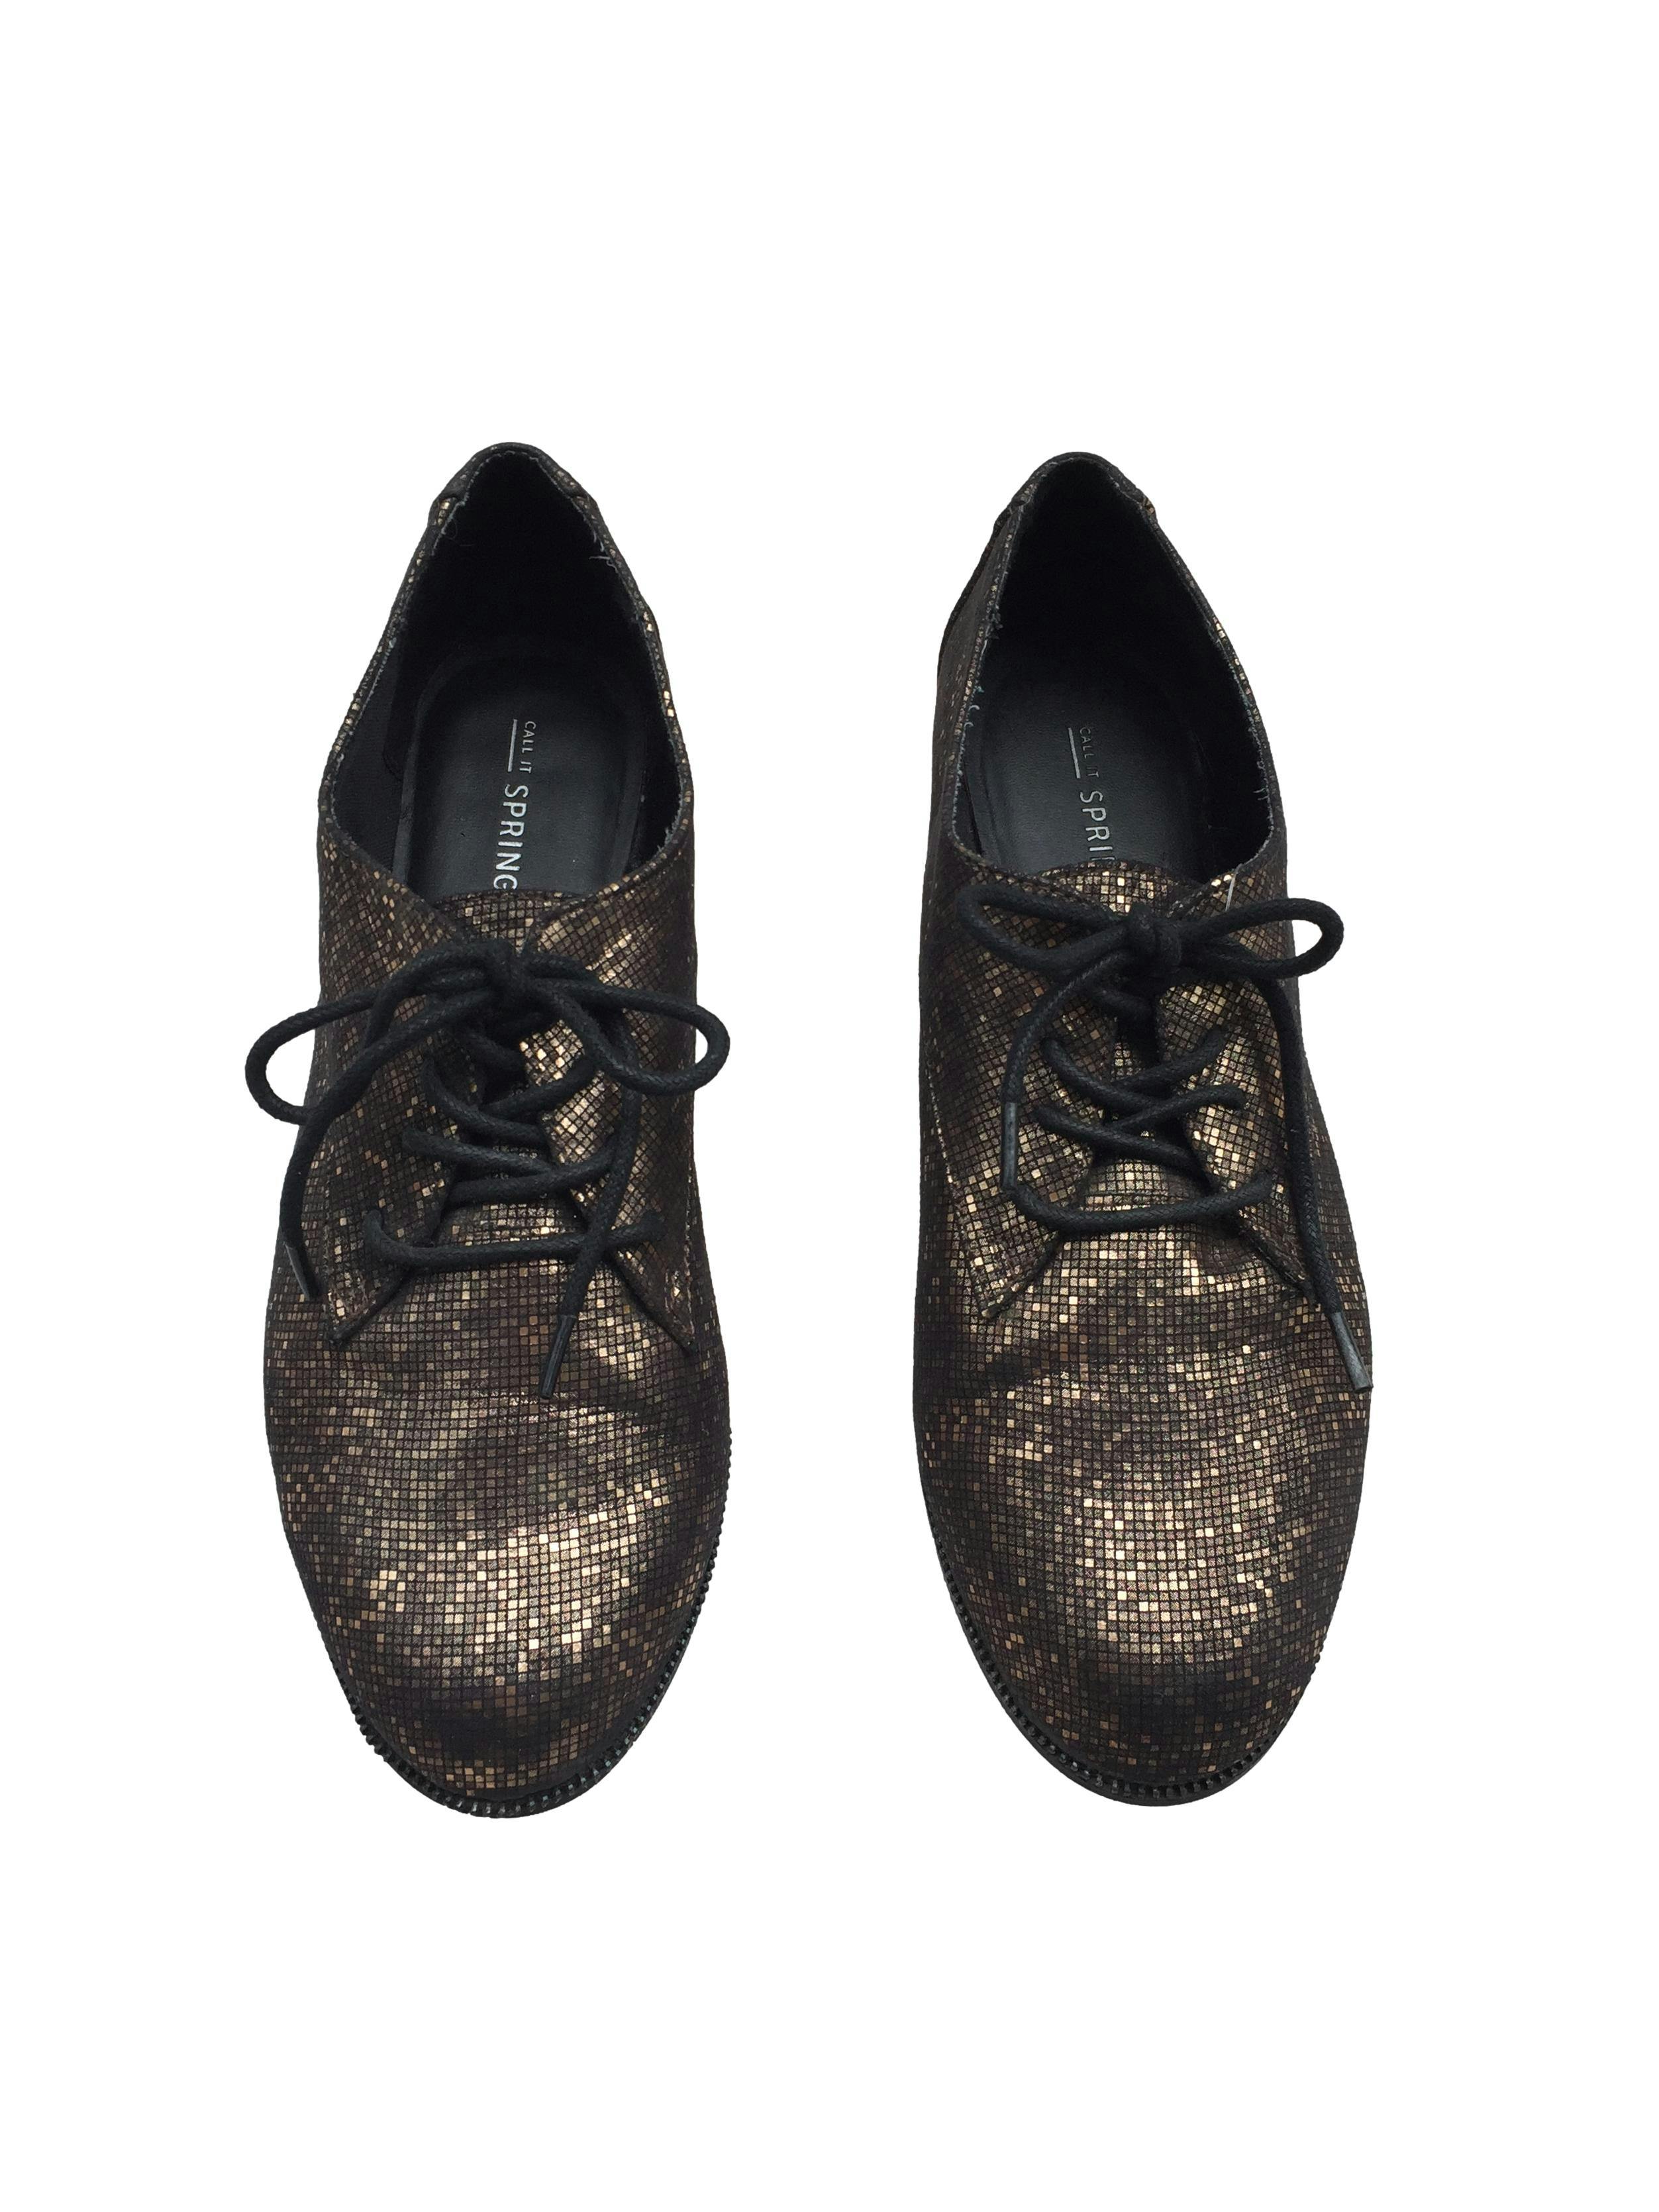 Zapatos Call it Spring negros con estampado de cuadritos bronce, pasadores. Estado 9/10.